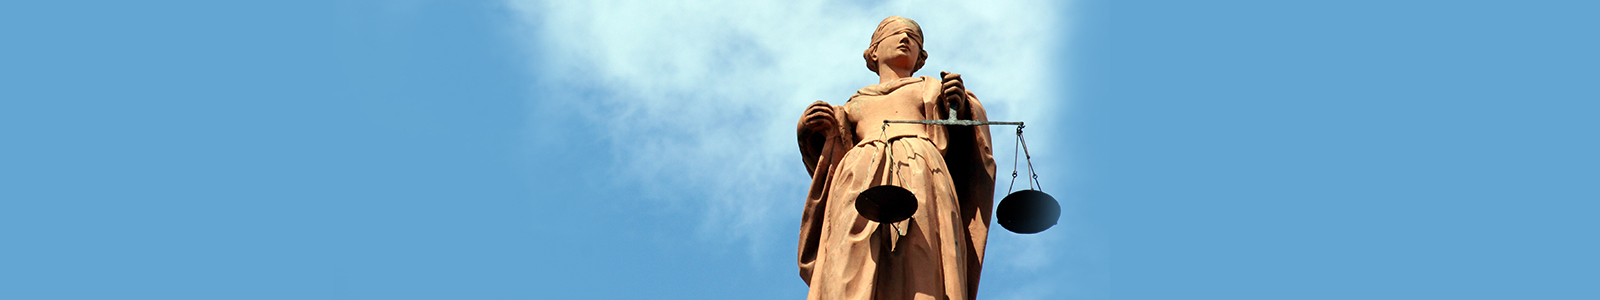 A statue representing justice